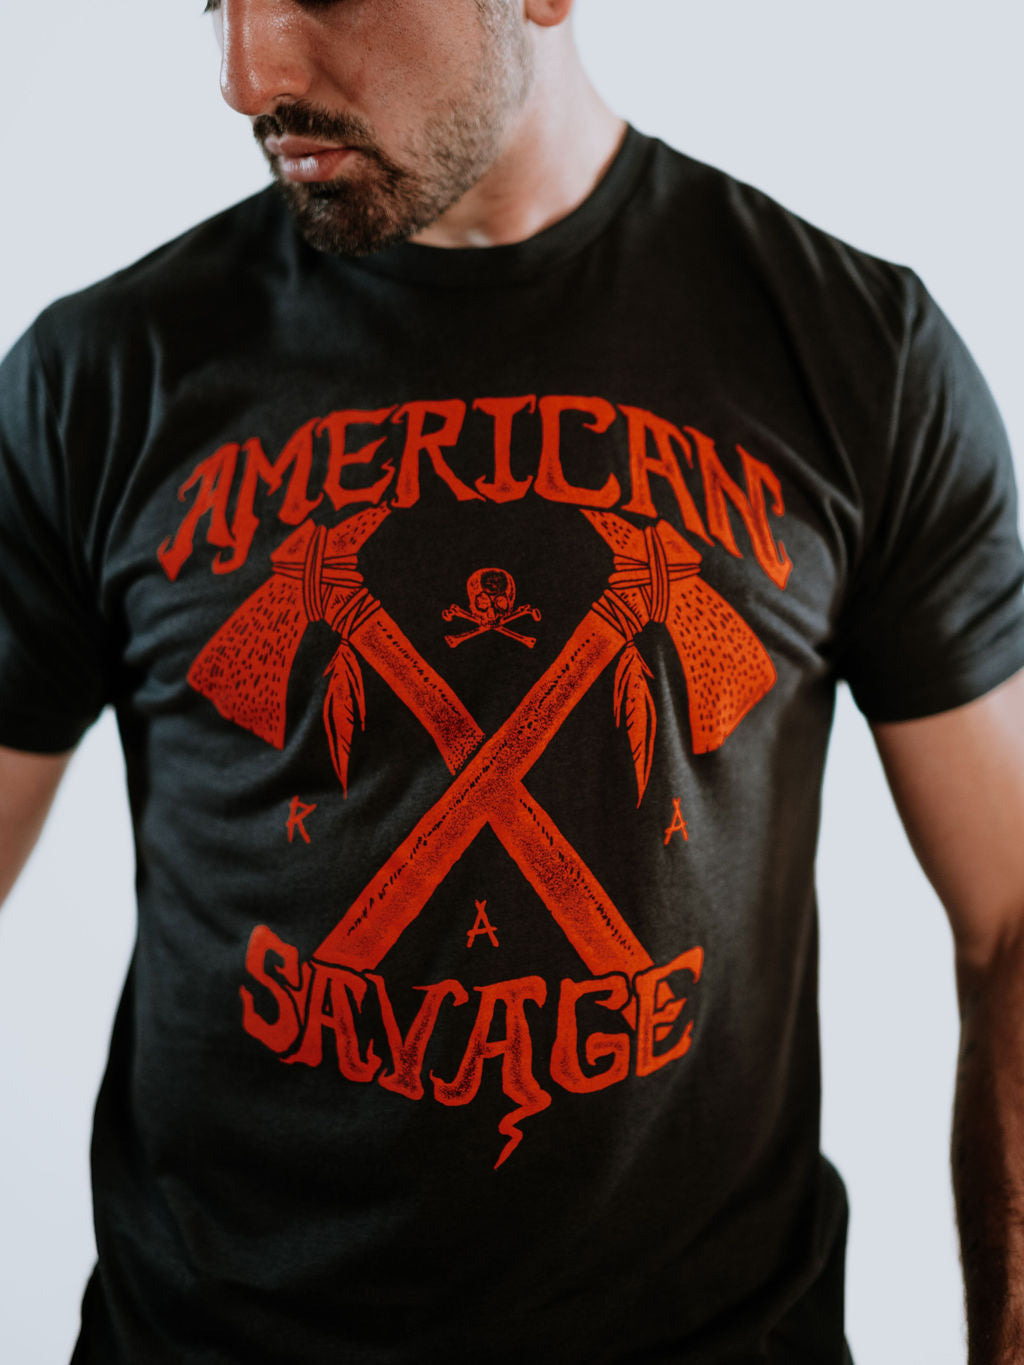 American Savage Shirt